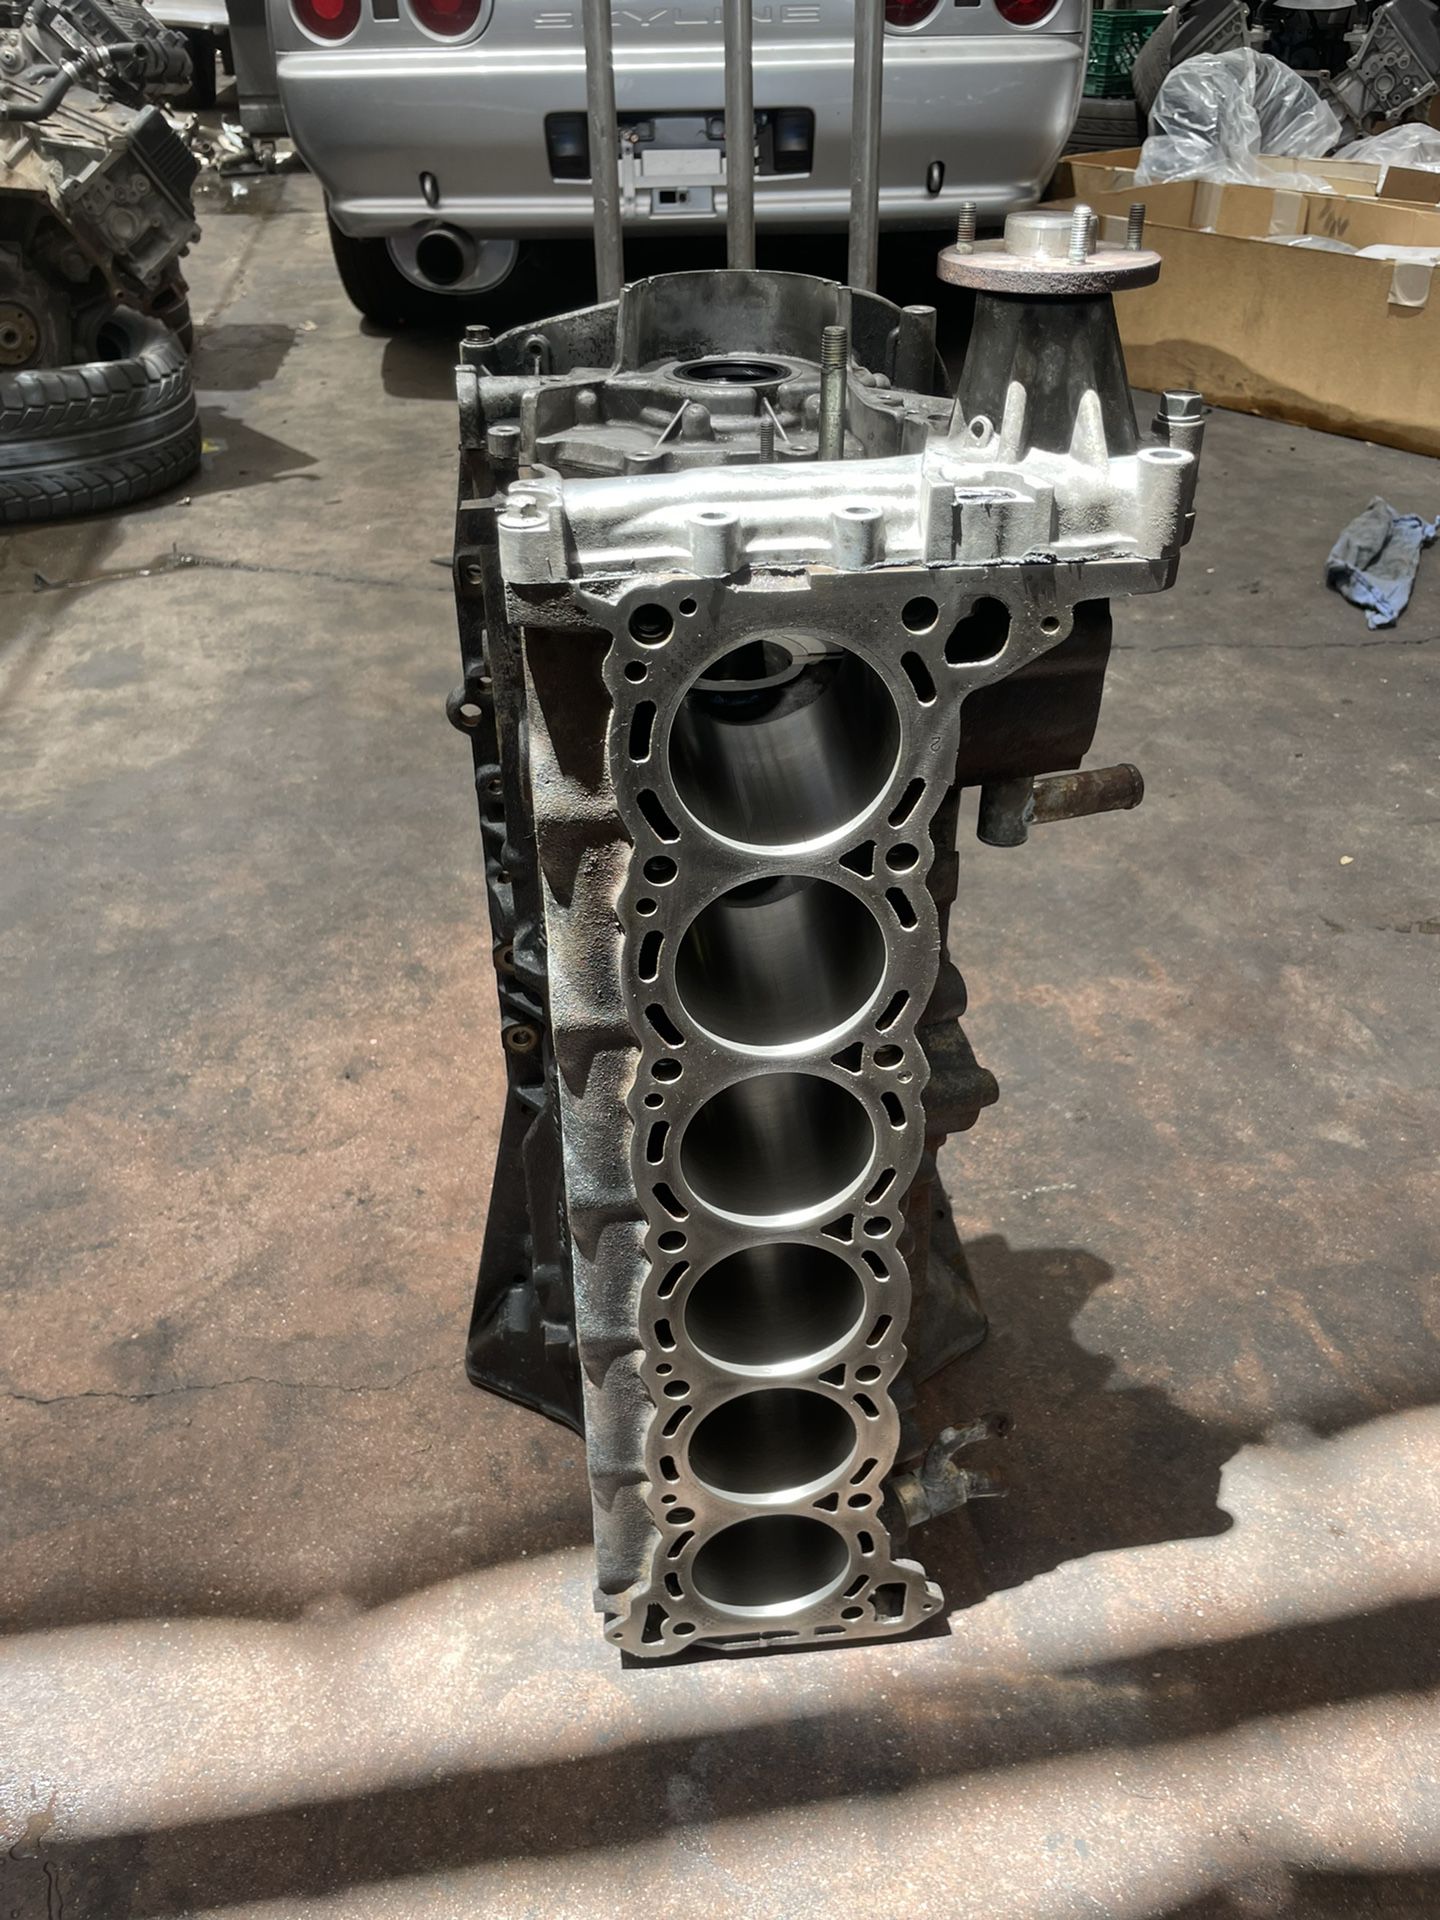 Rb26dett Nissan Engine Block 